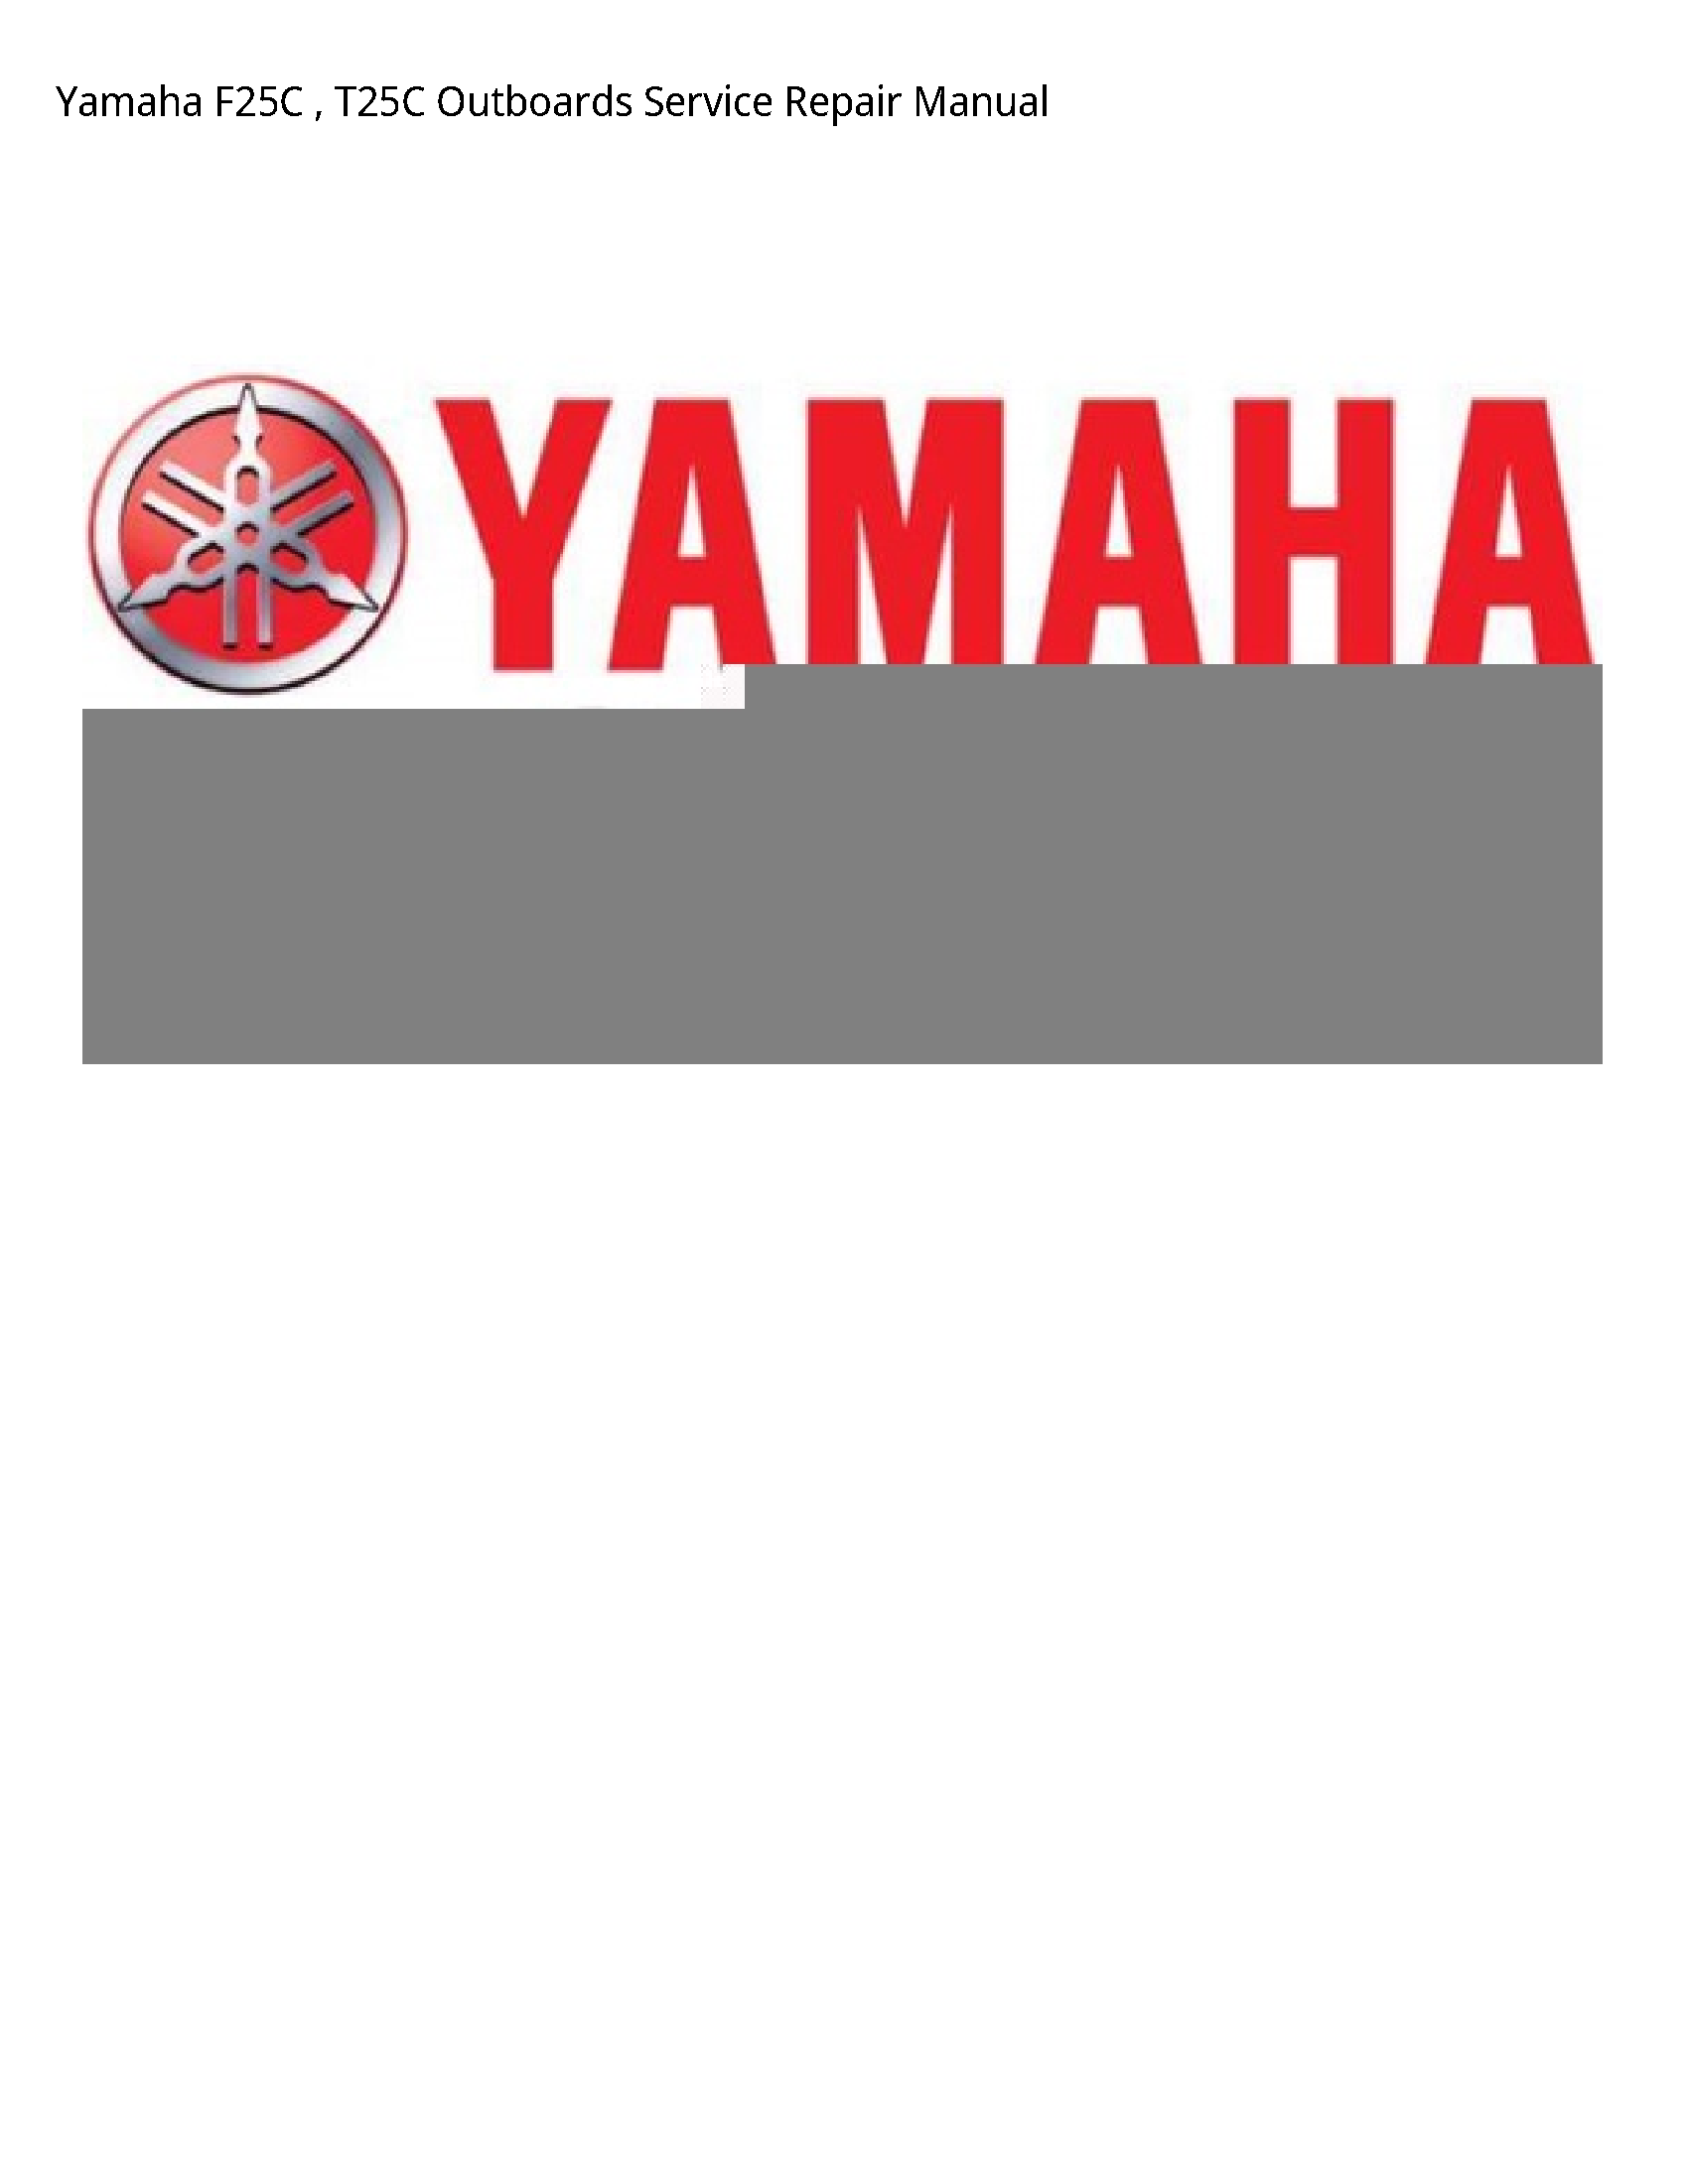 Yamaha F25C Outboards manual